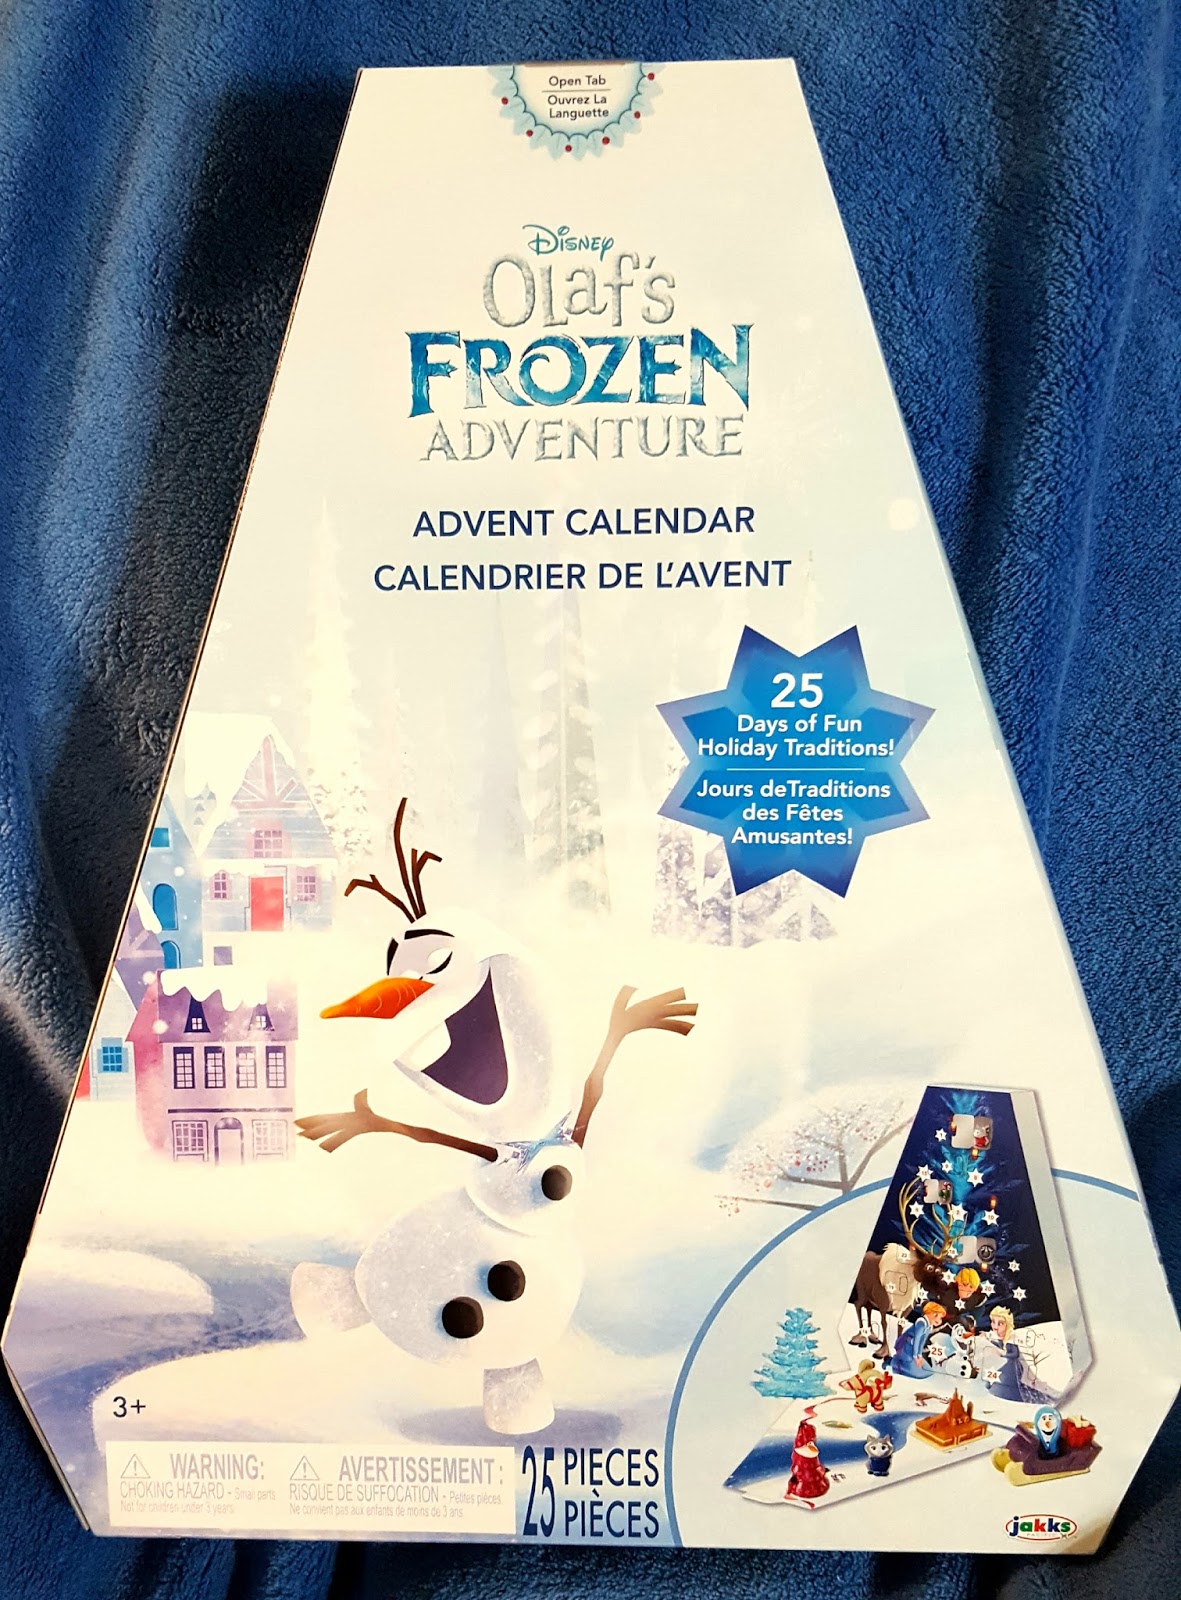 Disney at Heart Olaf's Frozen Adventure Advent Calendar